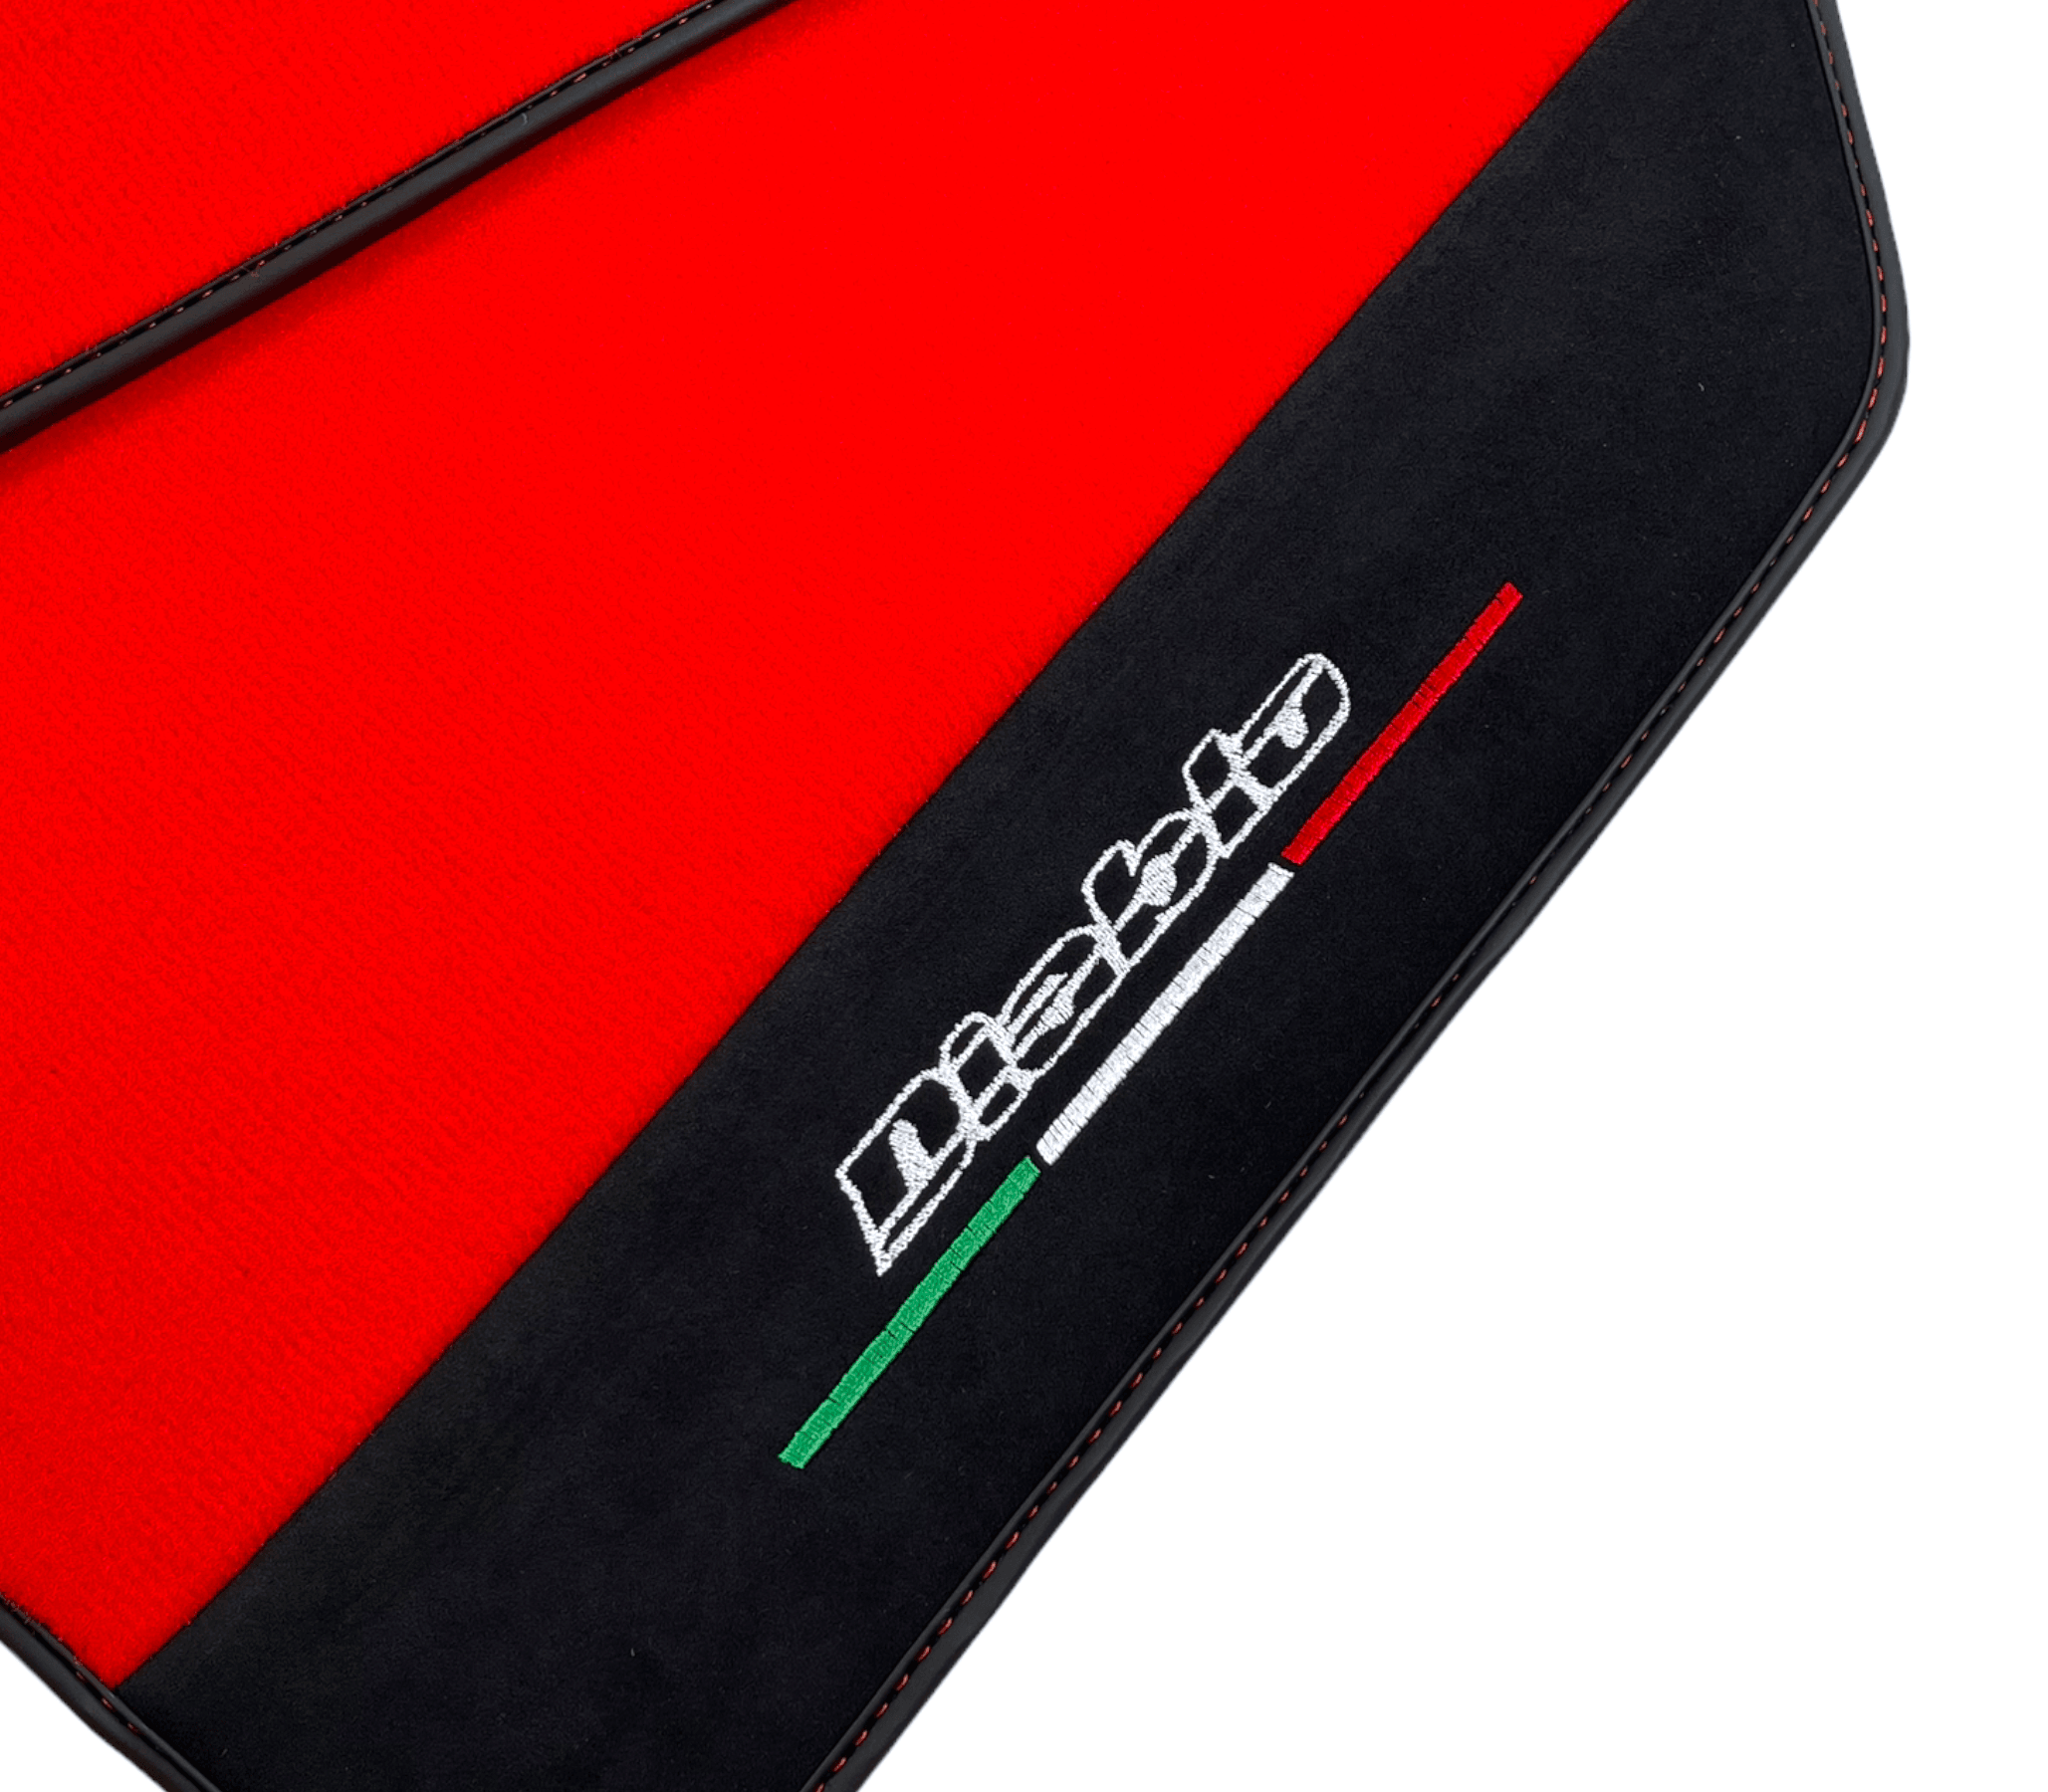 Red Floor Mats for Lamborghini Diablo 1990-2001 With Alcantara Leather - AutoWin